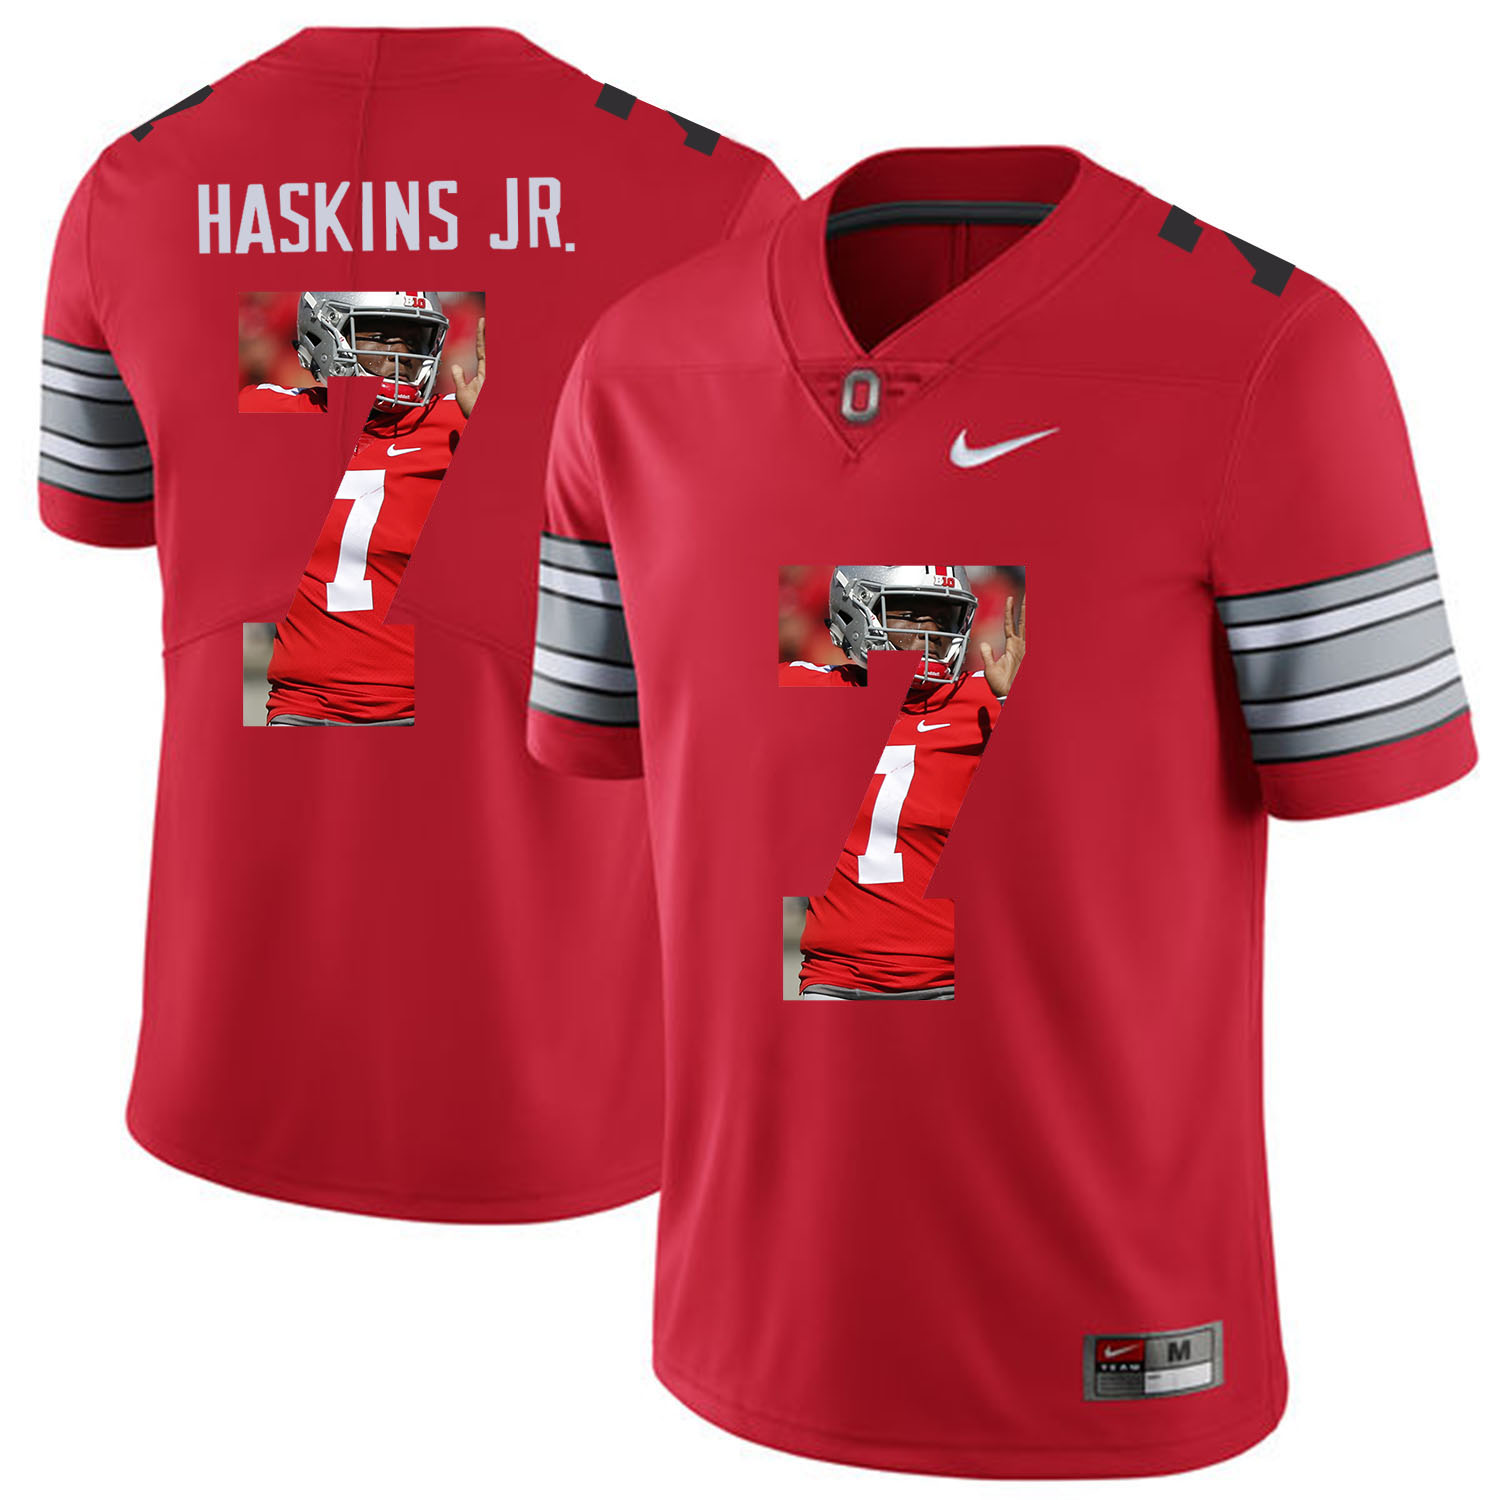 Men Ohio State 7 Haskins jr Red Fashion Edition Customized NCAA Jerseys